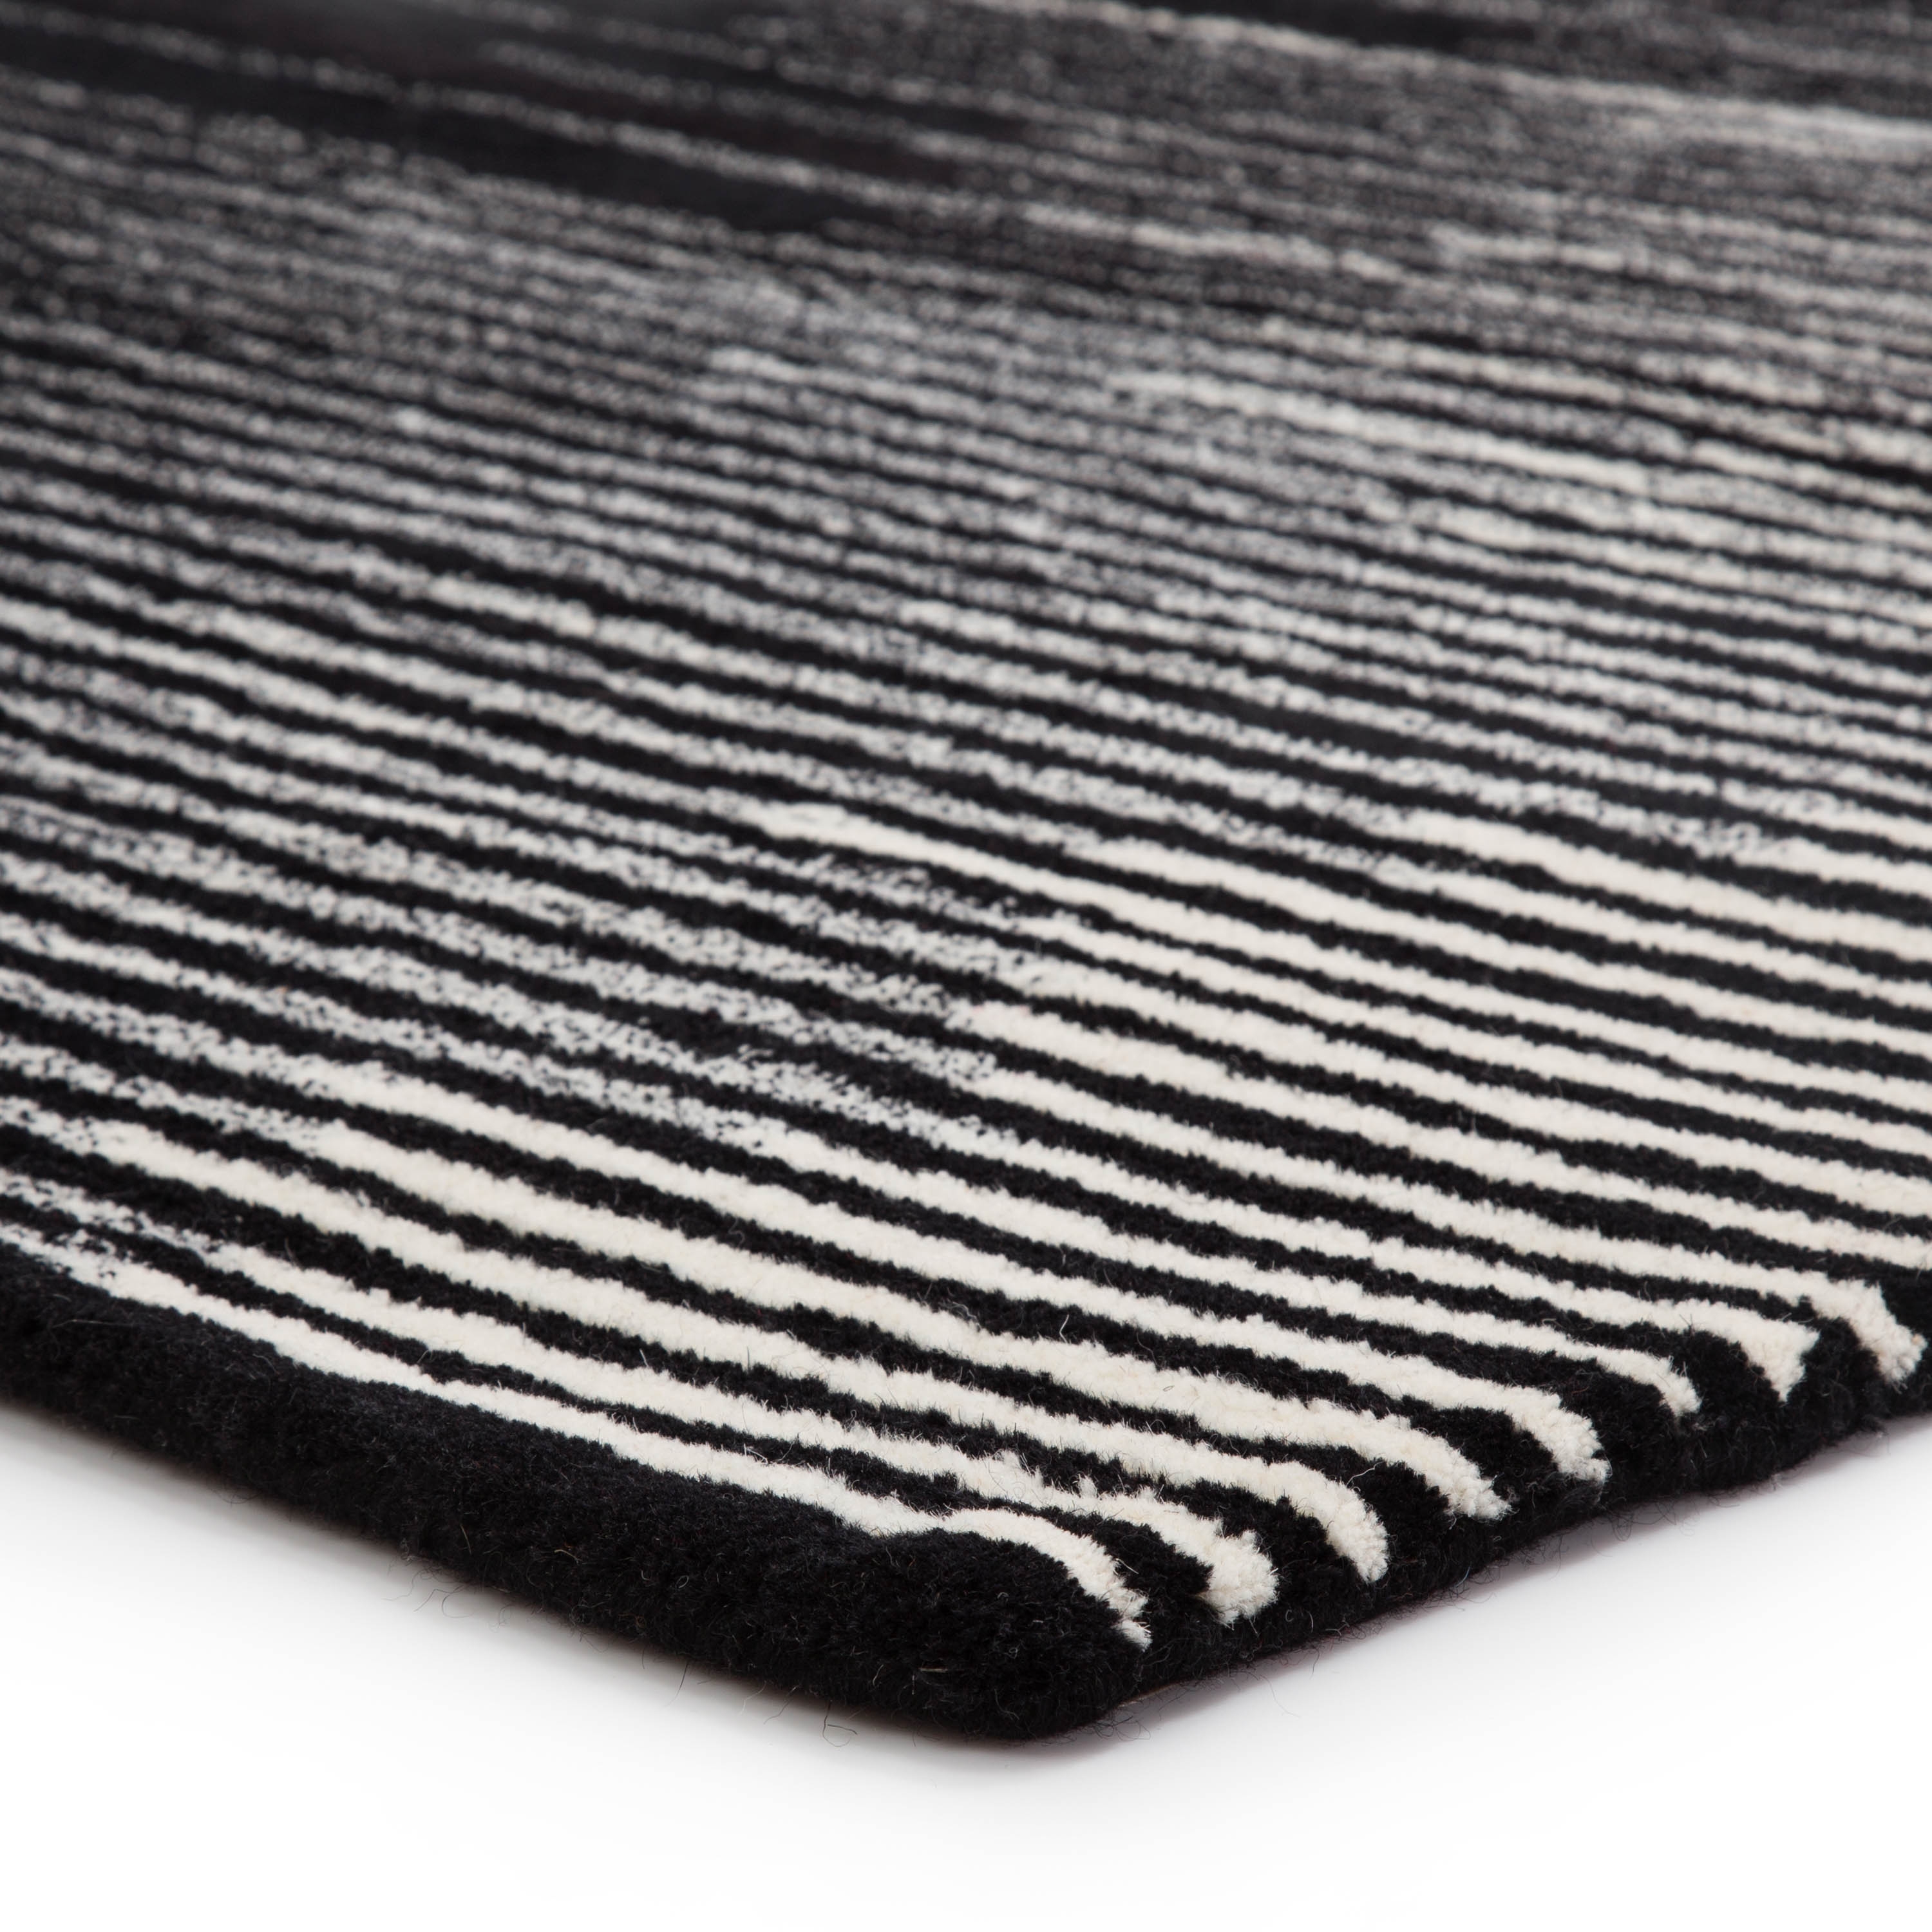 Tabo Handmade Stripe Black/ Cream Area Rug (9' X 12') - Image 1